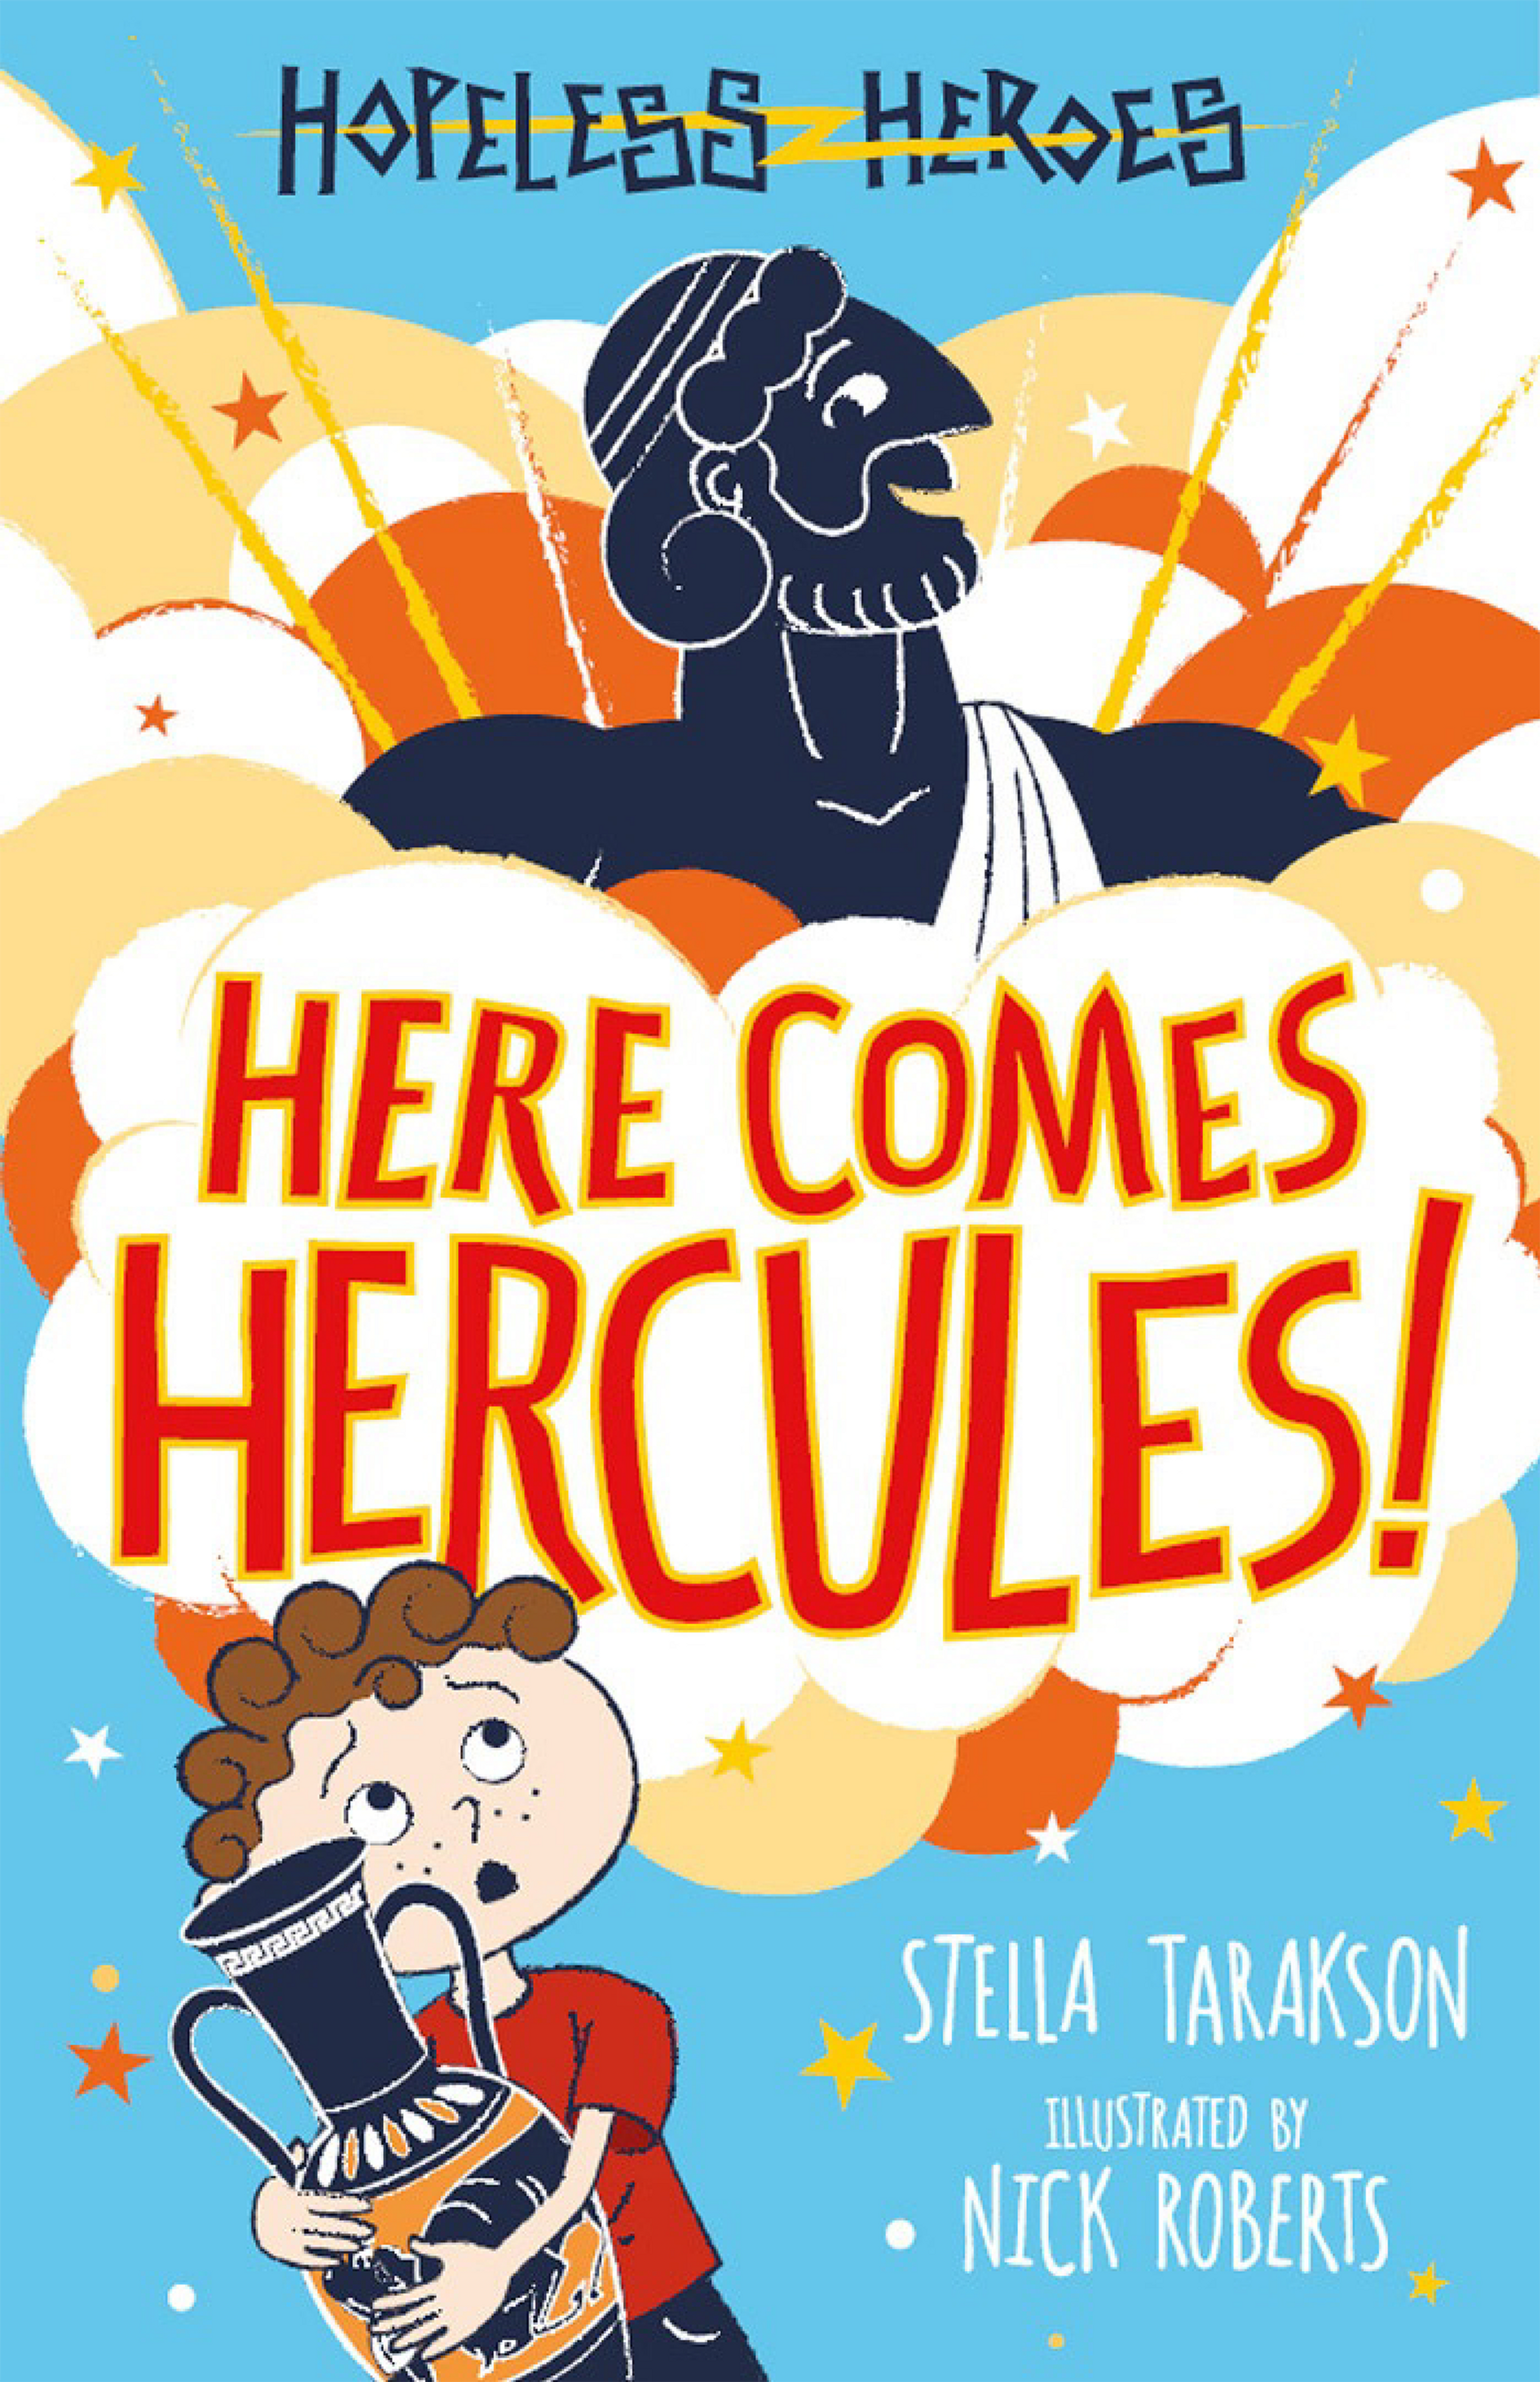 here comes hercules!